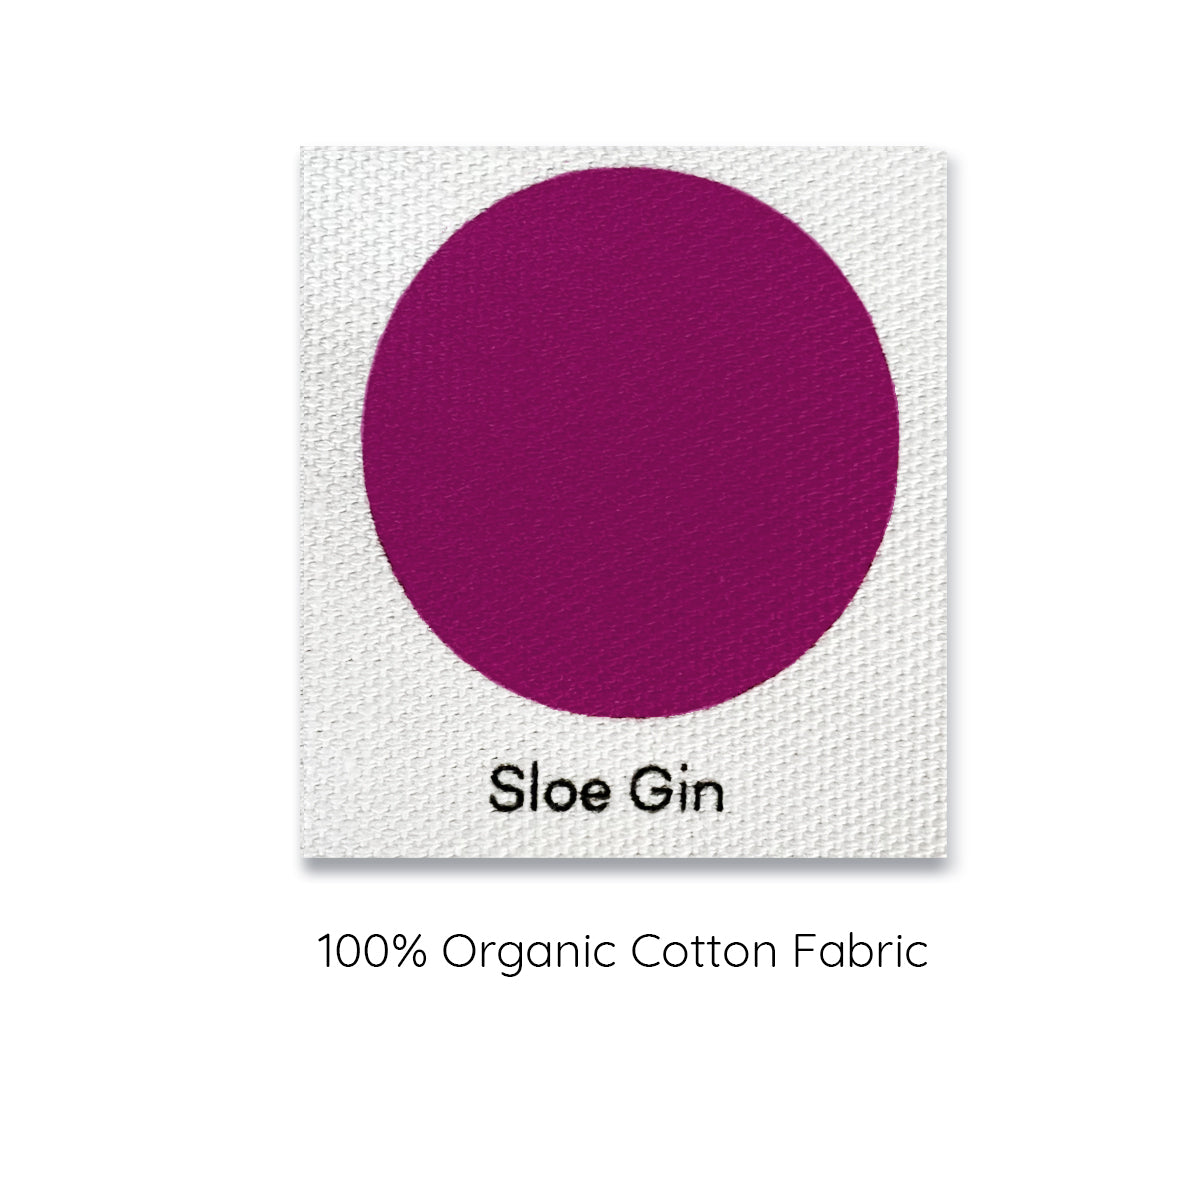 Sloe gin cushion cover sample.